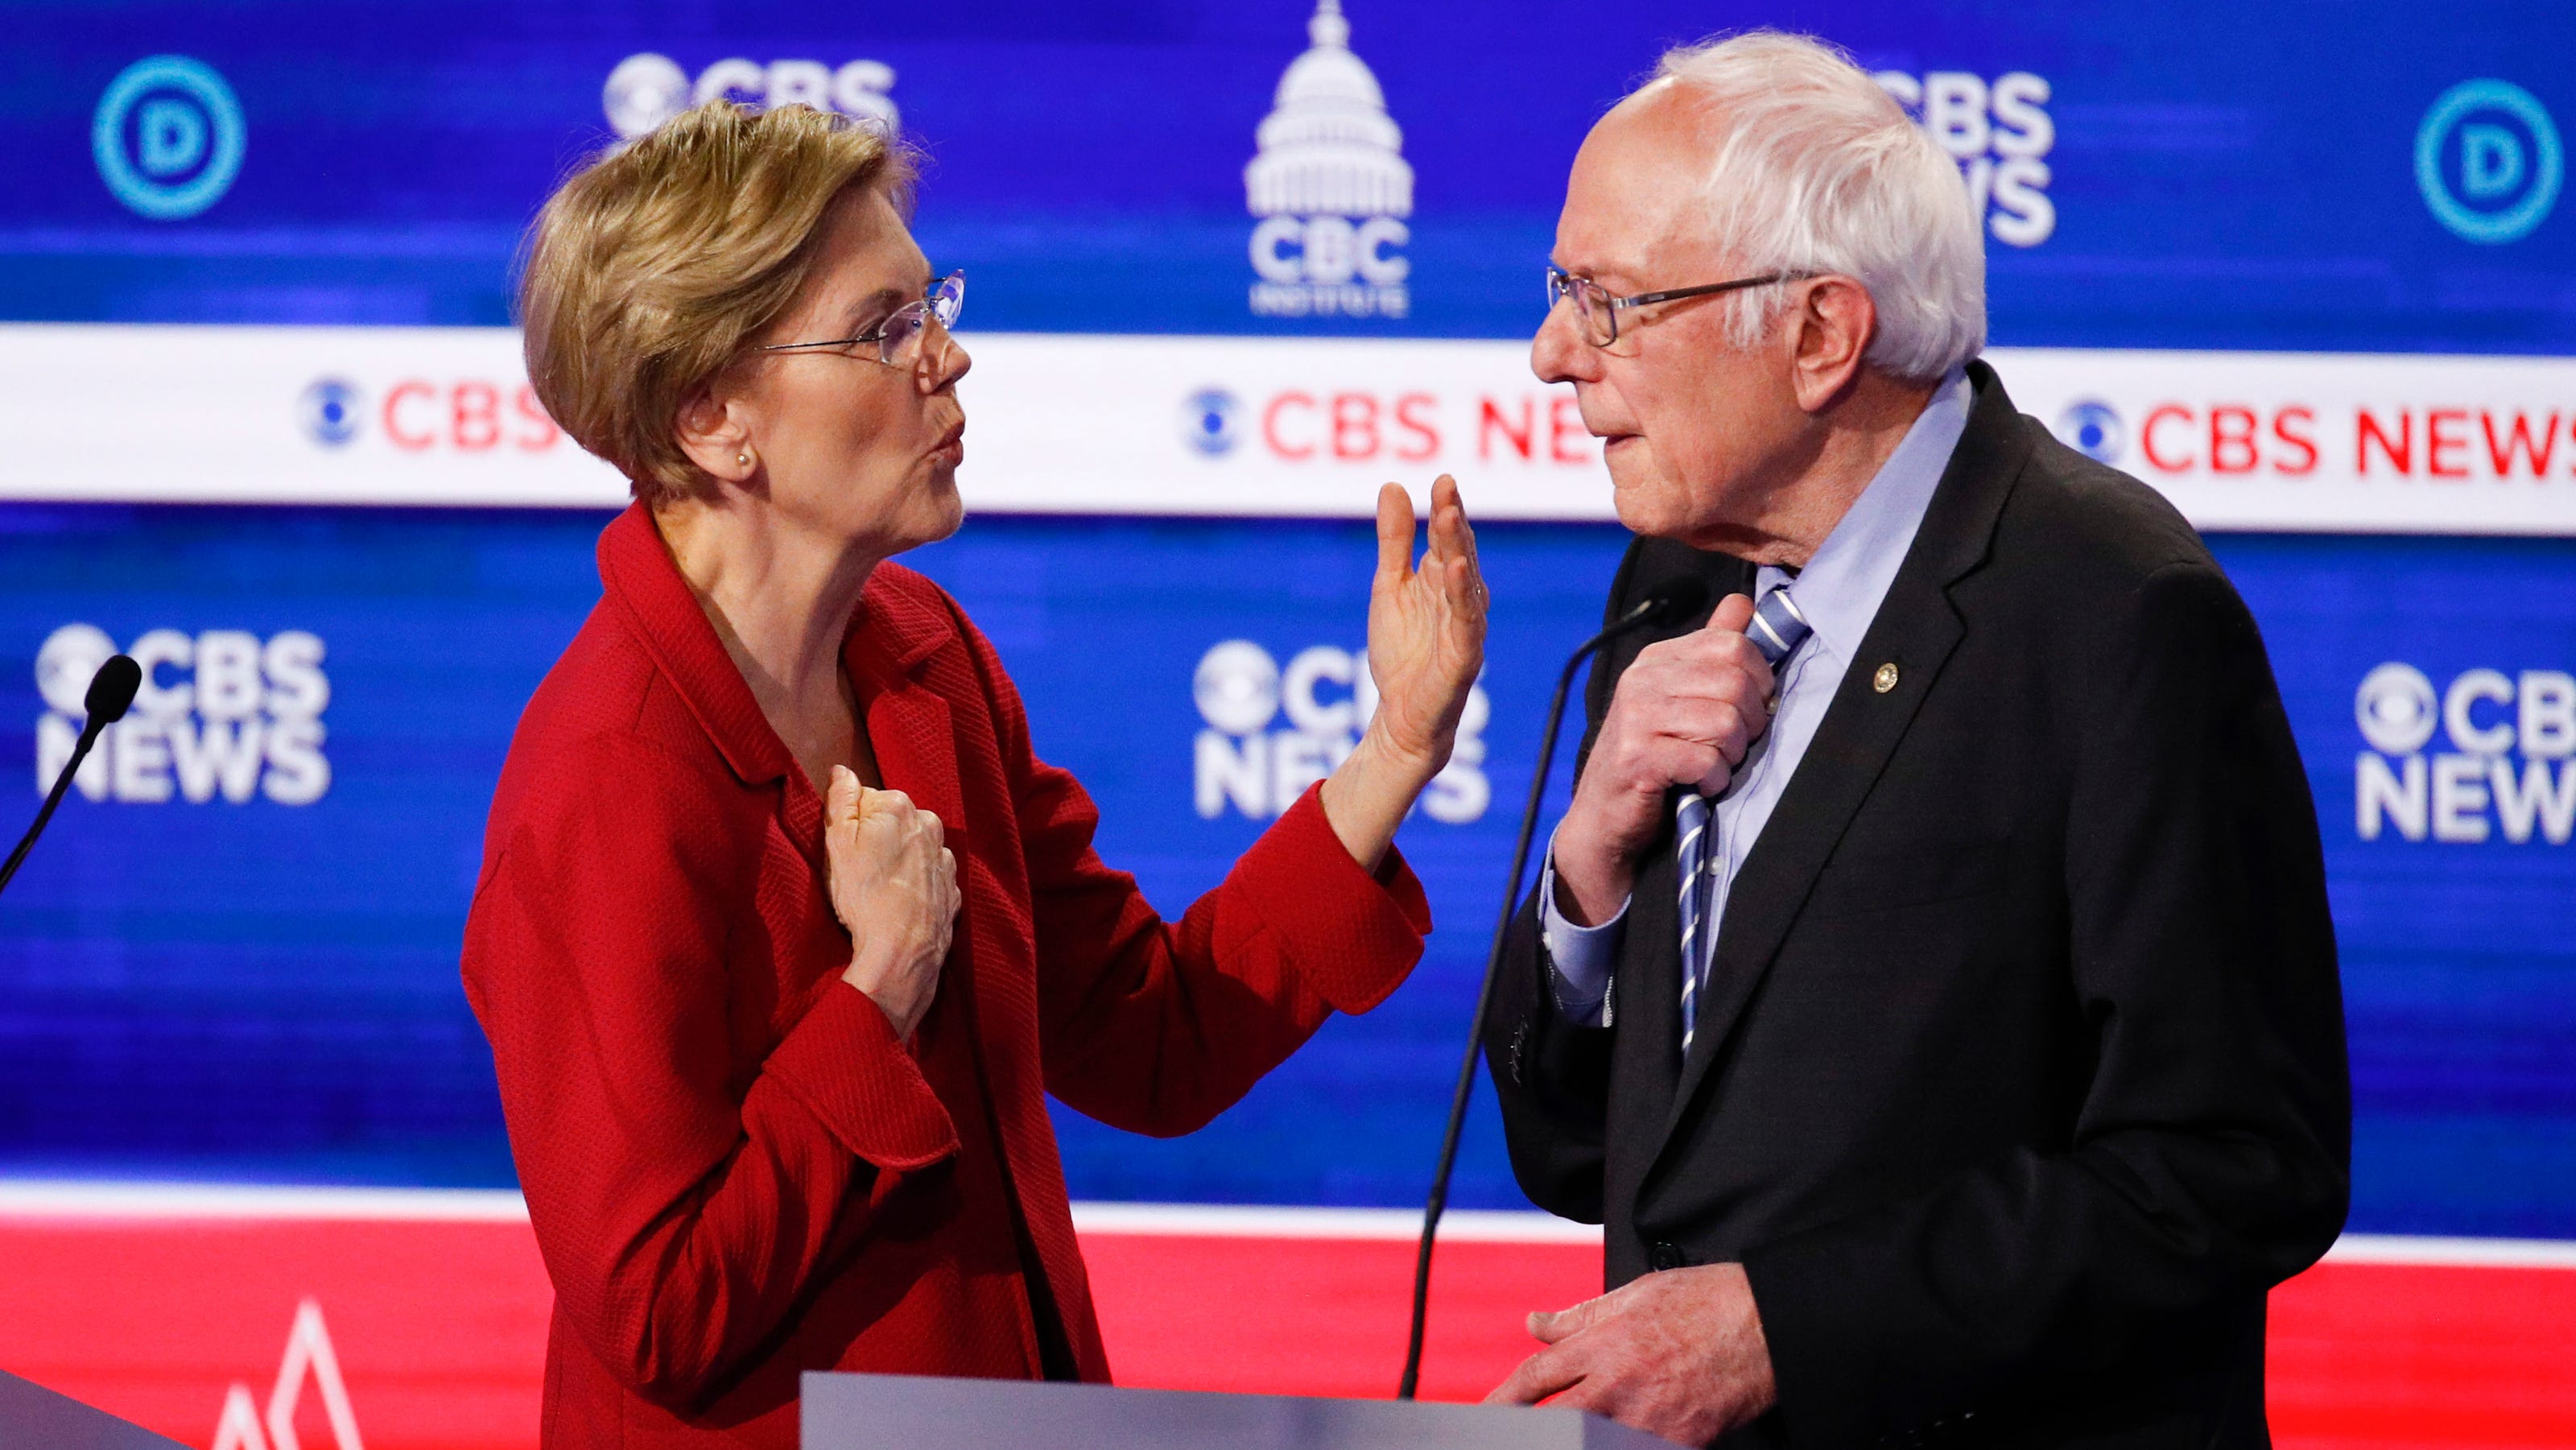 Elizabeth Warren To Persist Into Convention Even If Down In Delegates